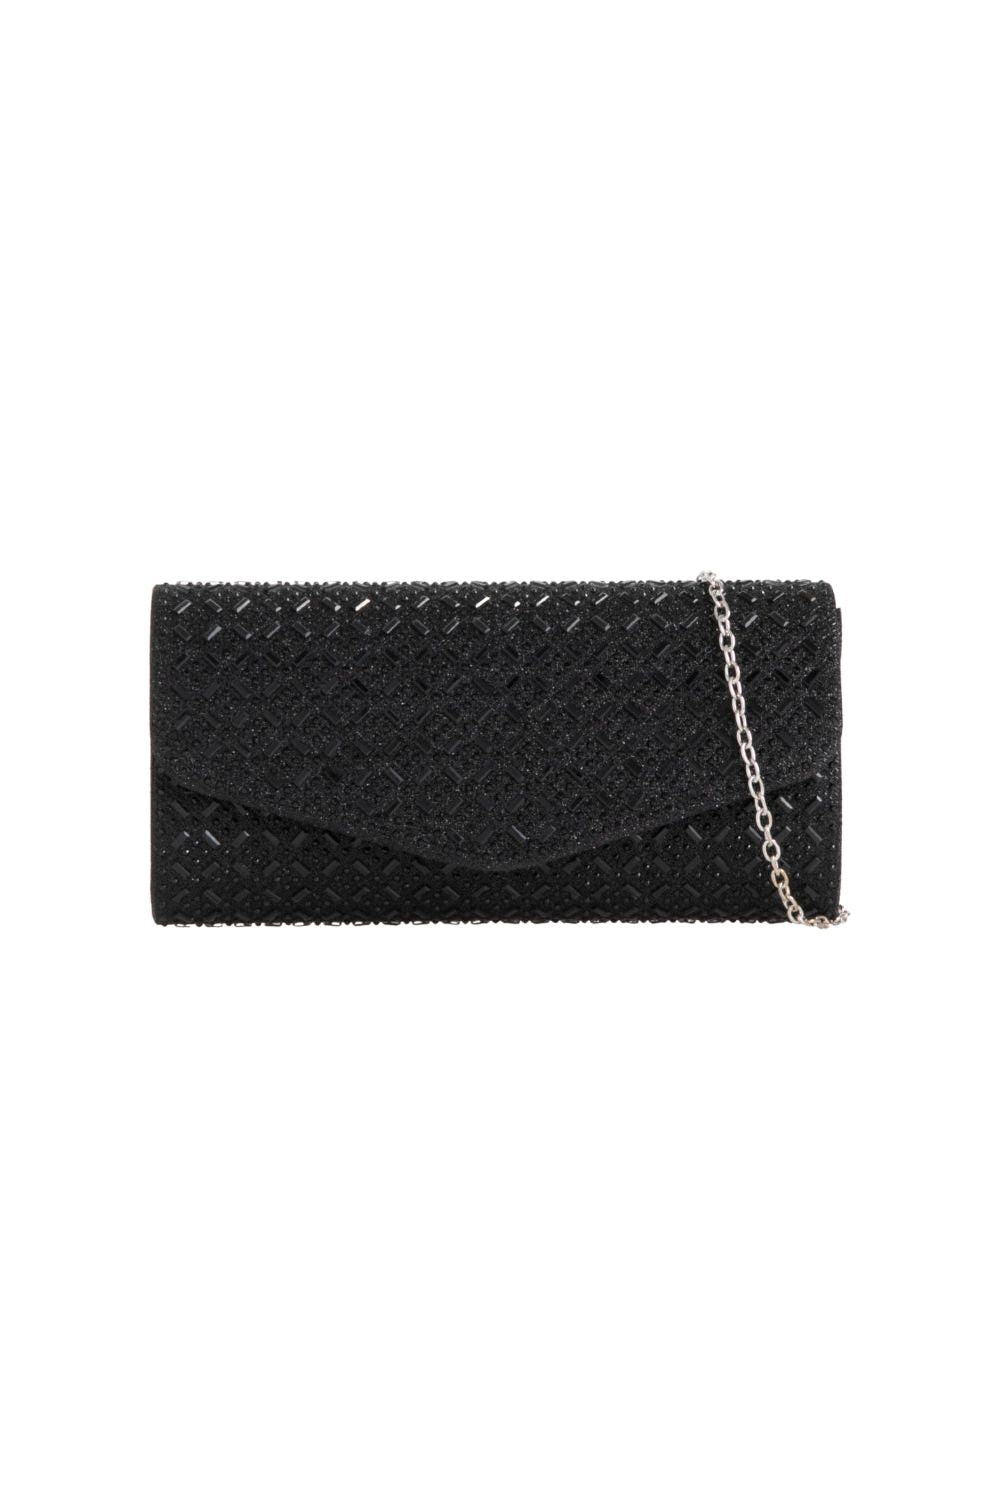 Black Diamante Evening Clutch Bag ALCS3055